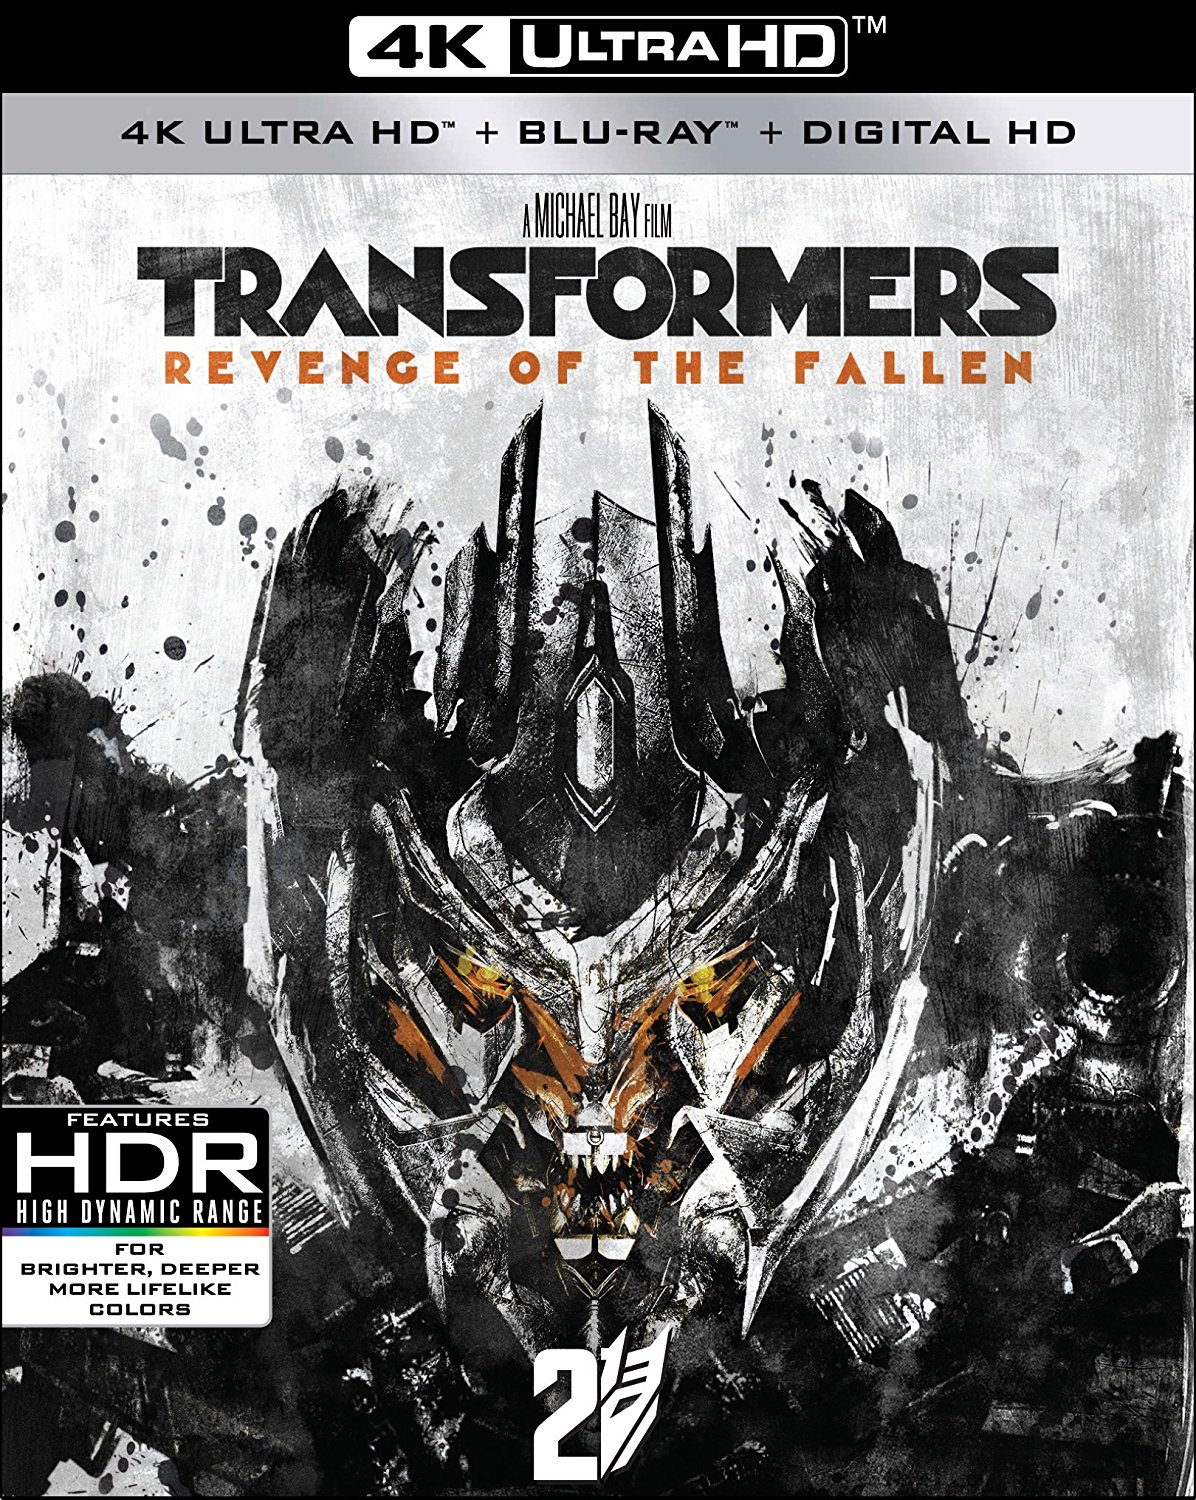 [变形金刚2].Transformers.Revenge.of.the.Fallen.2009.TW.UHD.BluRay.2160p.HEVC.TrueHD.7.1-TTG   89.17G-2.jpg